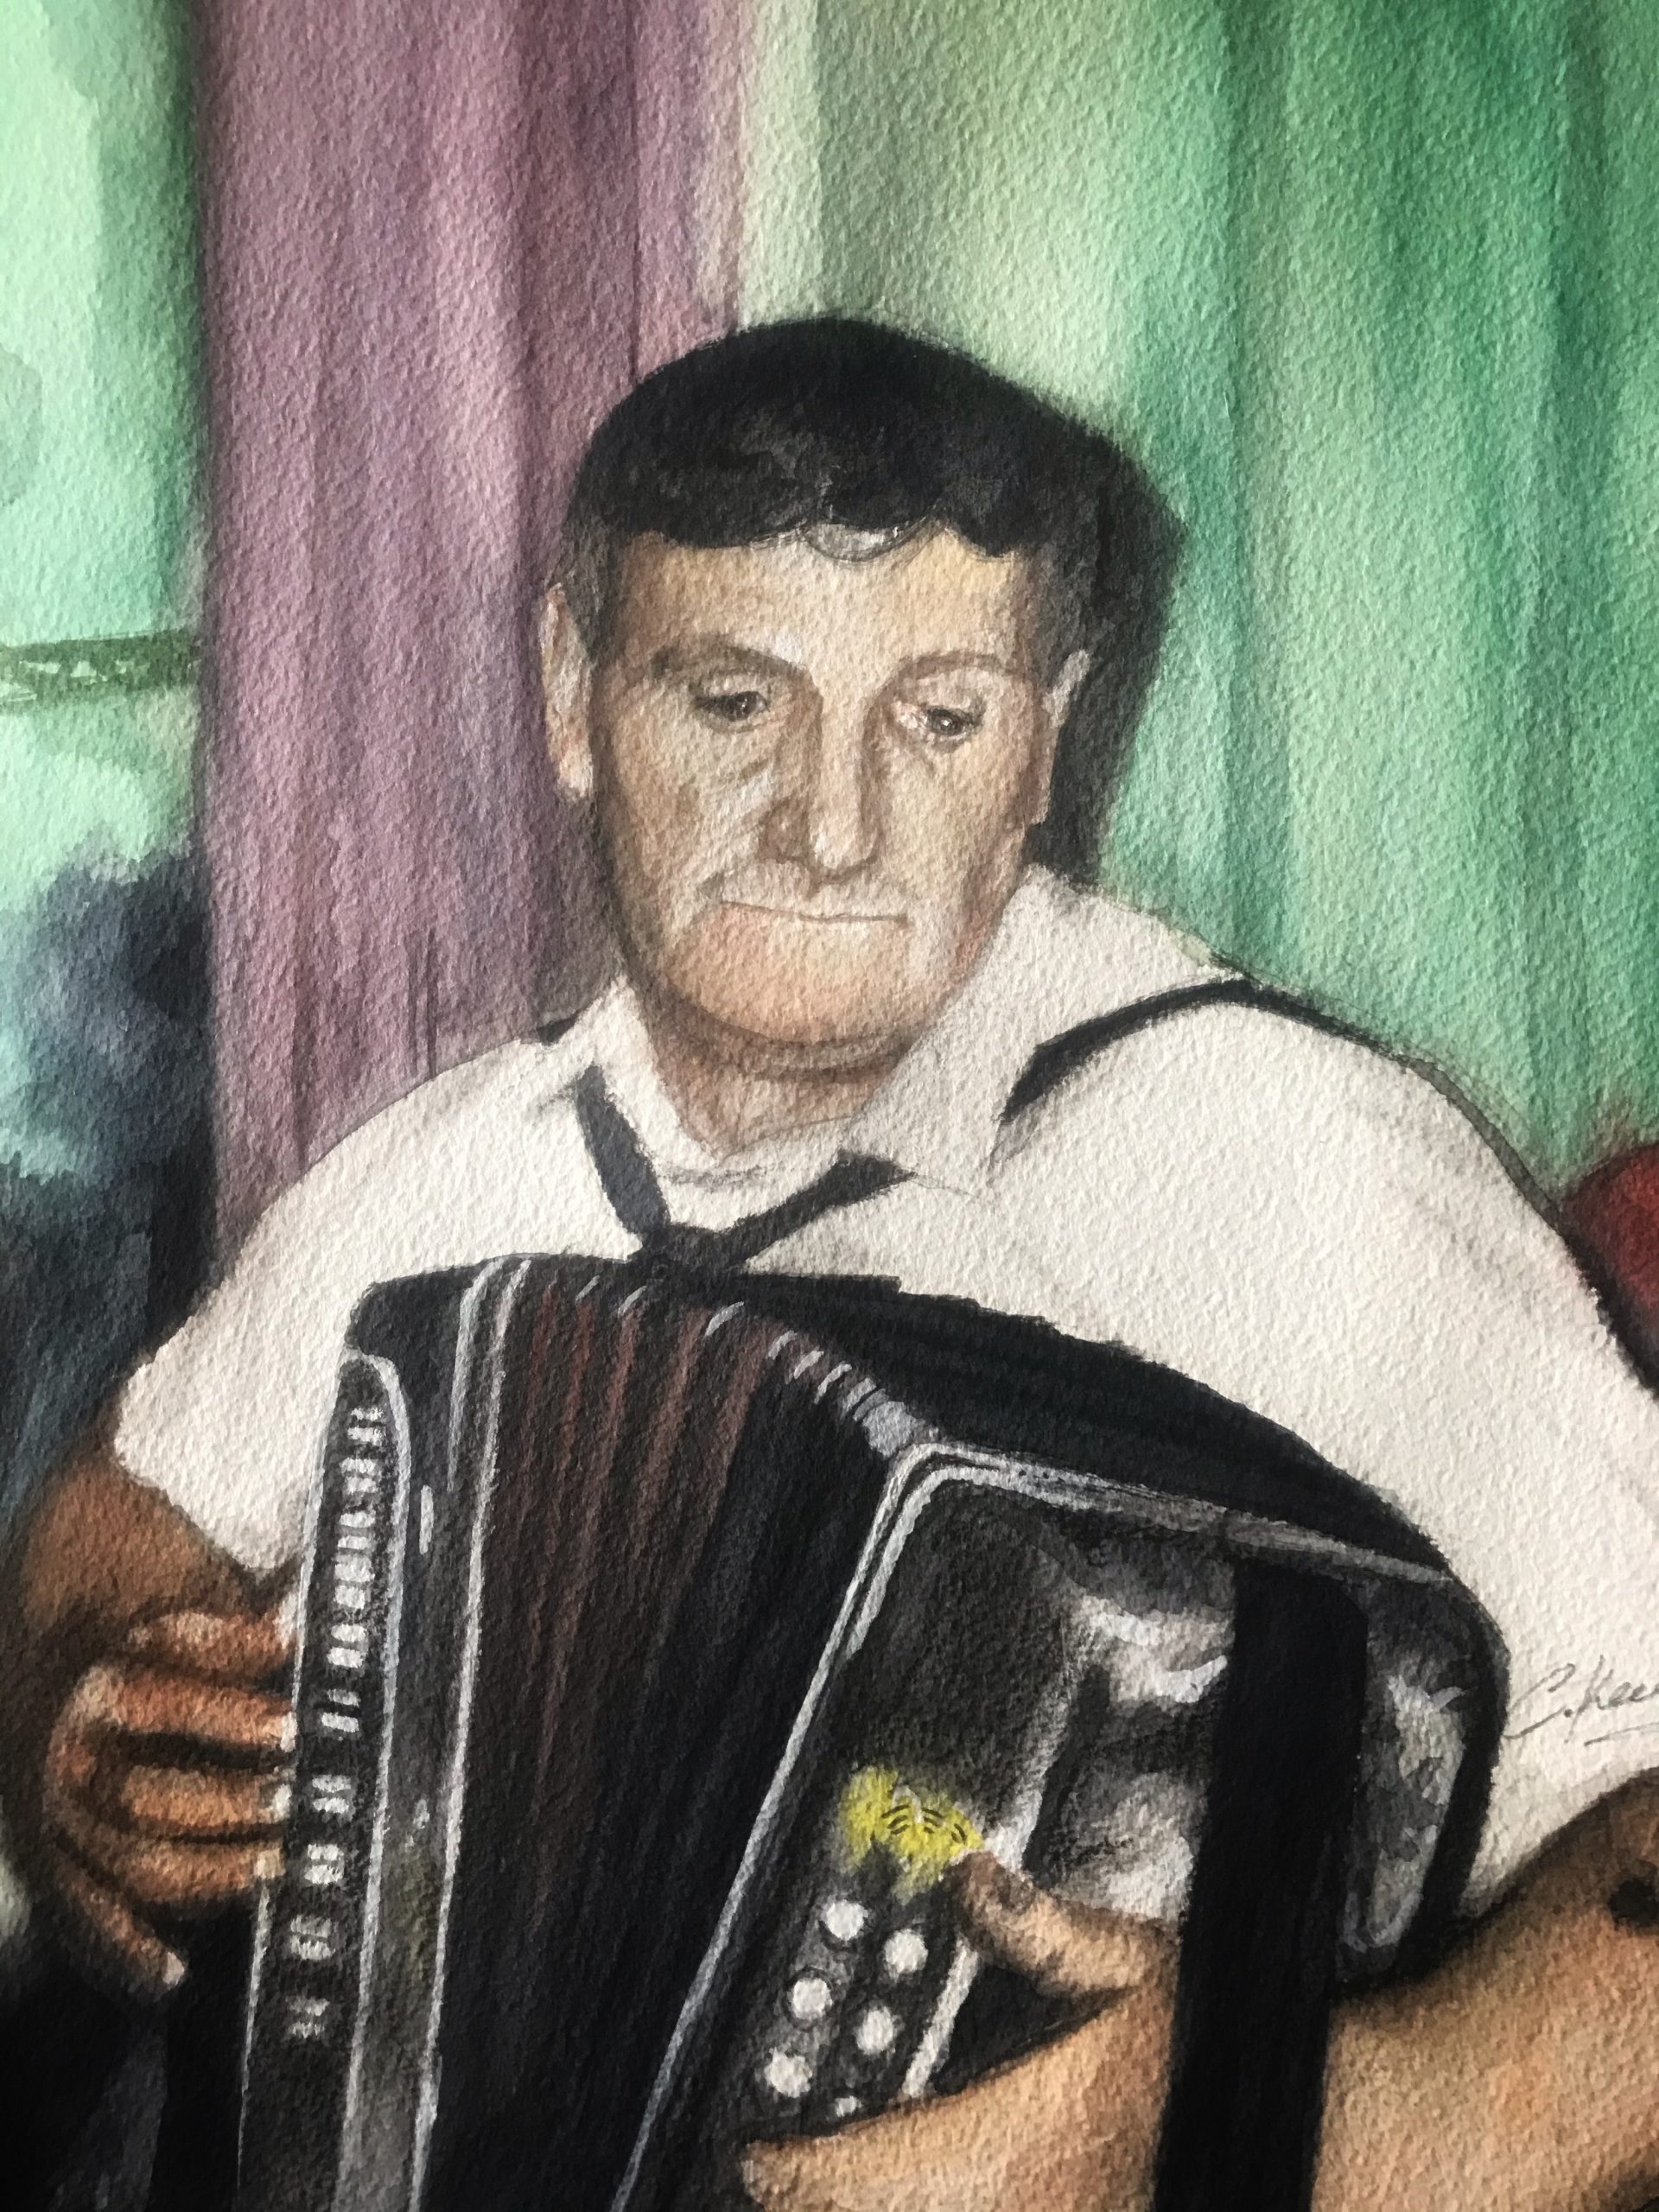 Man playing accordian portrait